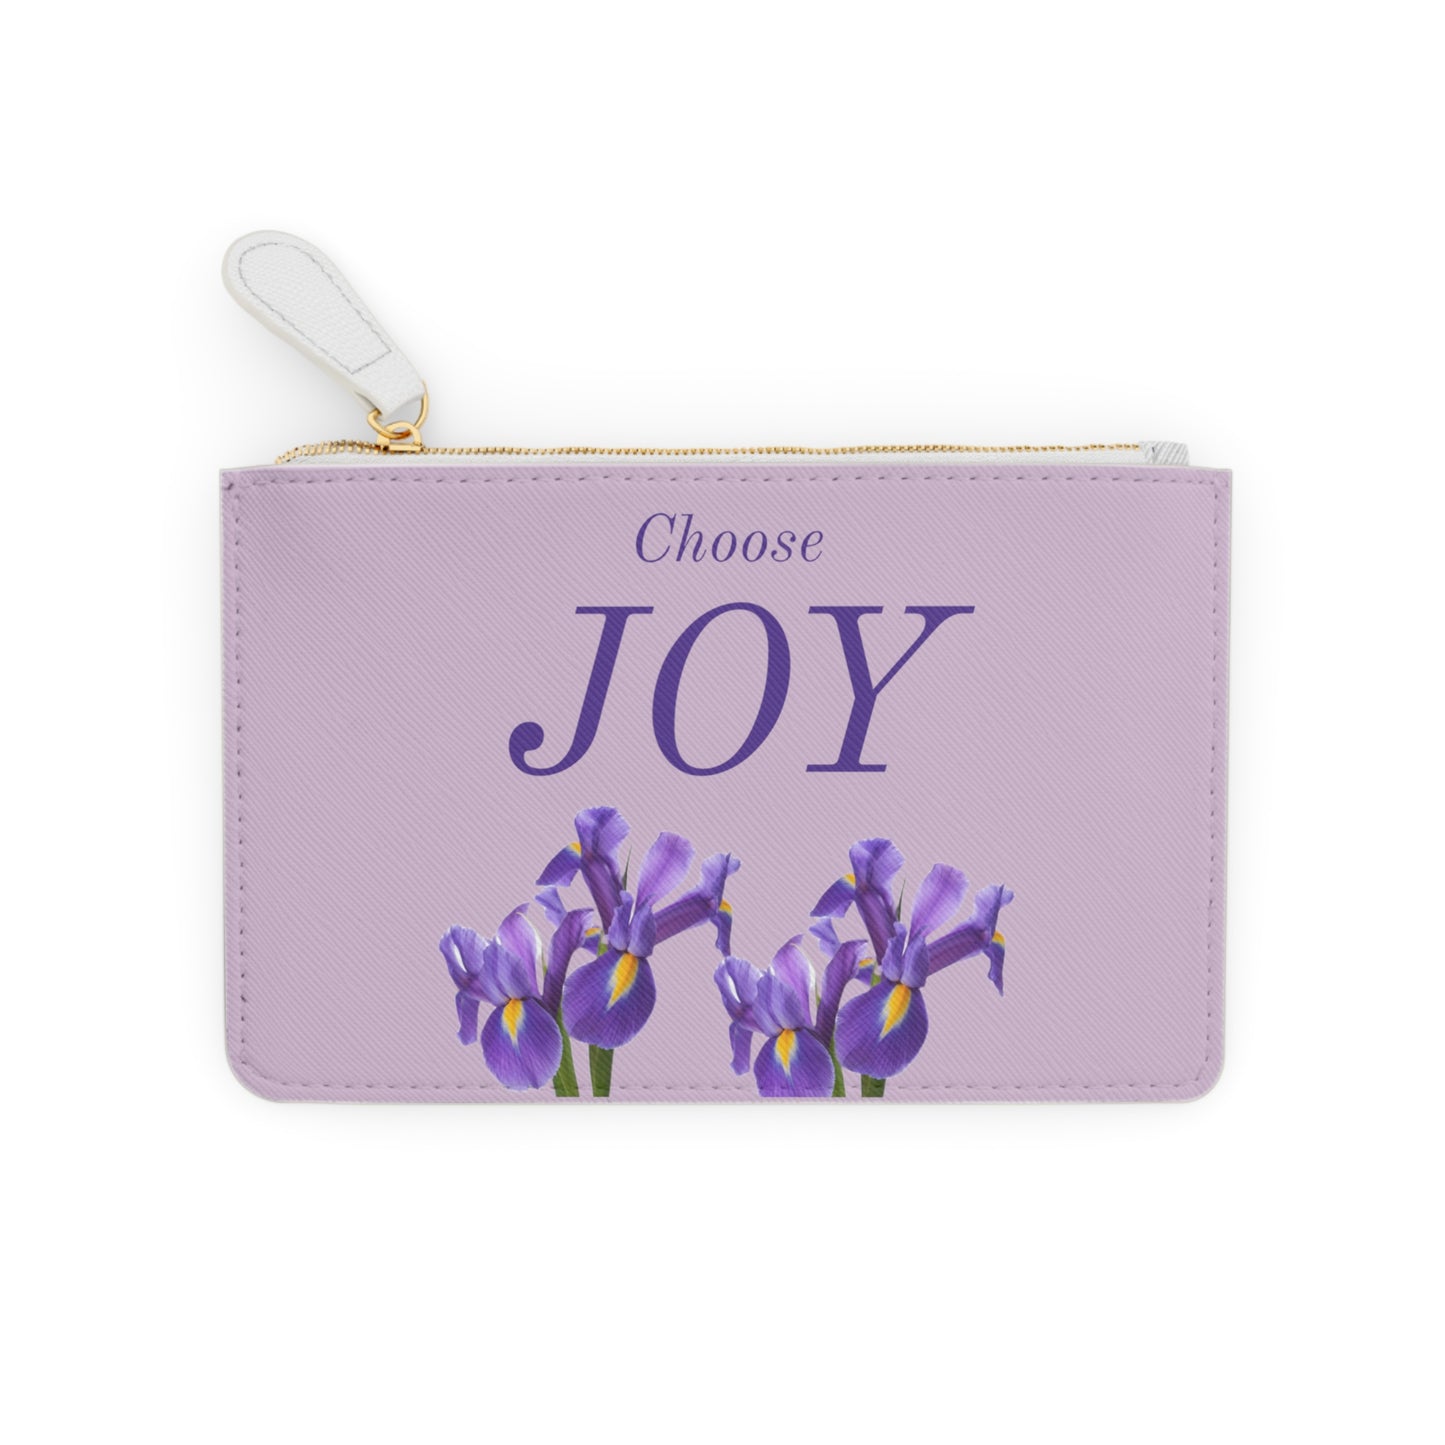 Mini Clutch Bag - Choose Joy